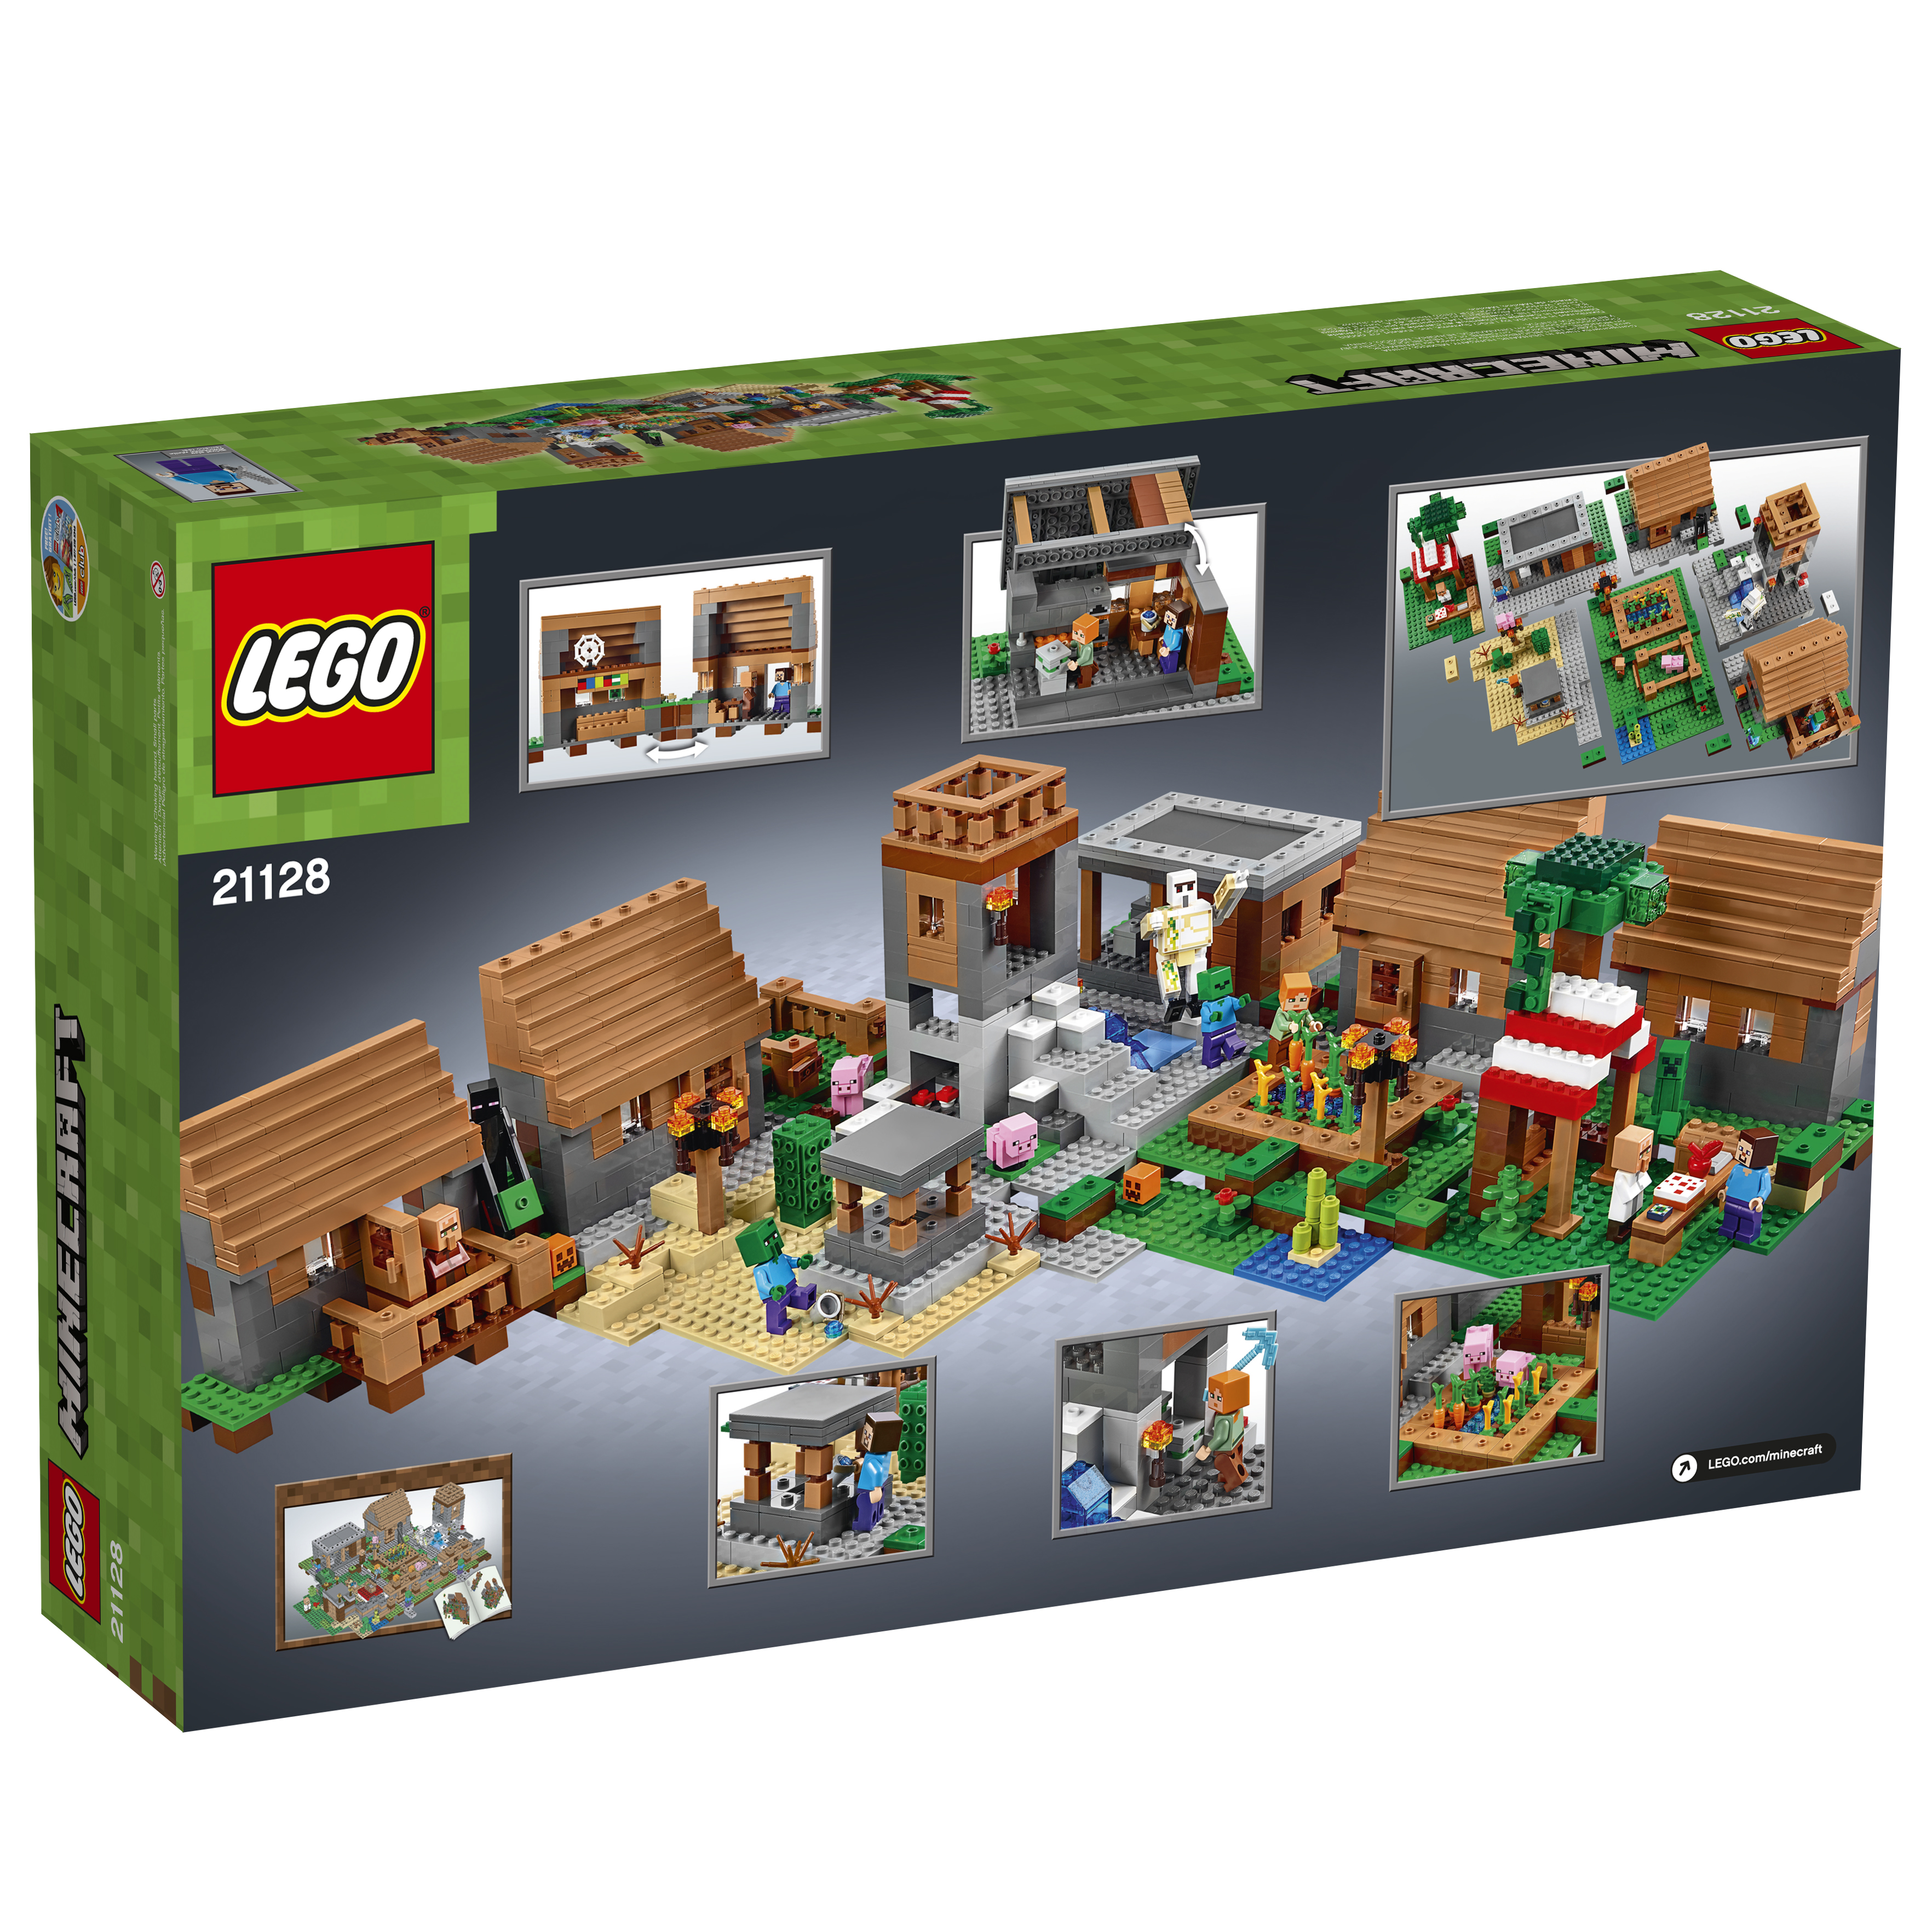 LEGO announces The Village, the largest set - Jay's Brick Blog